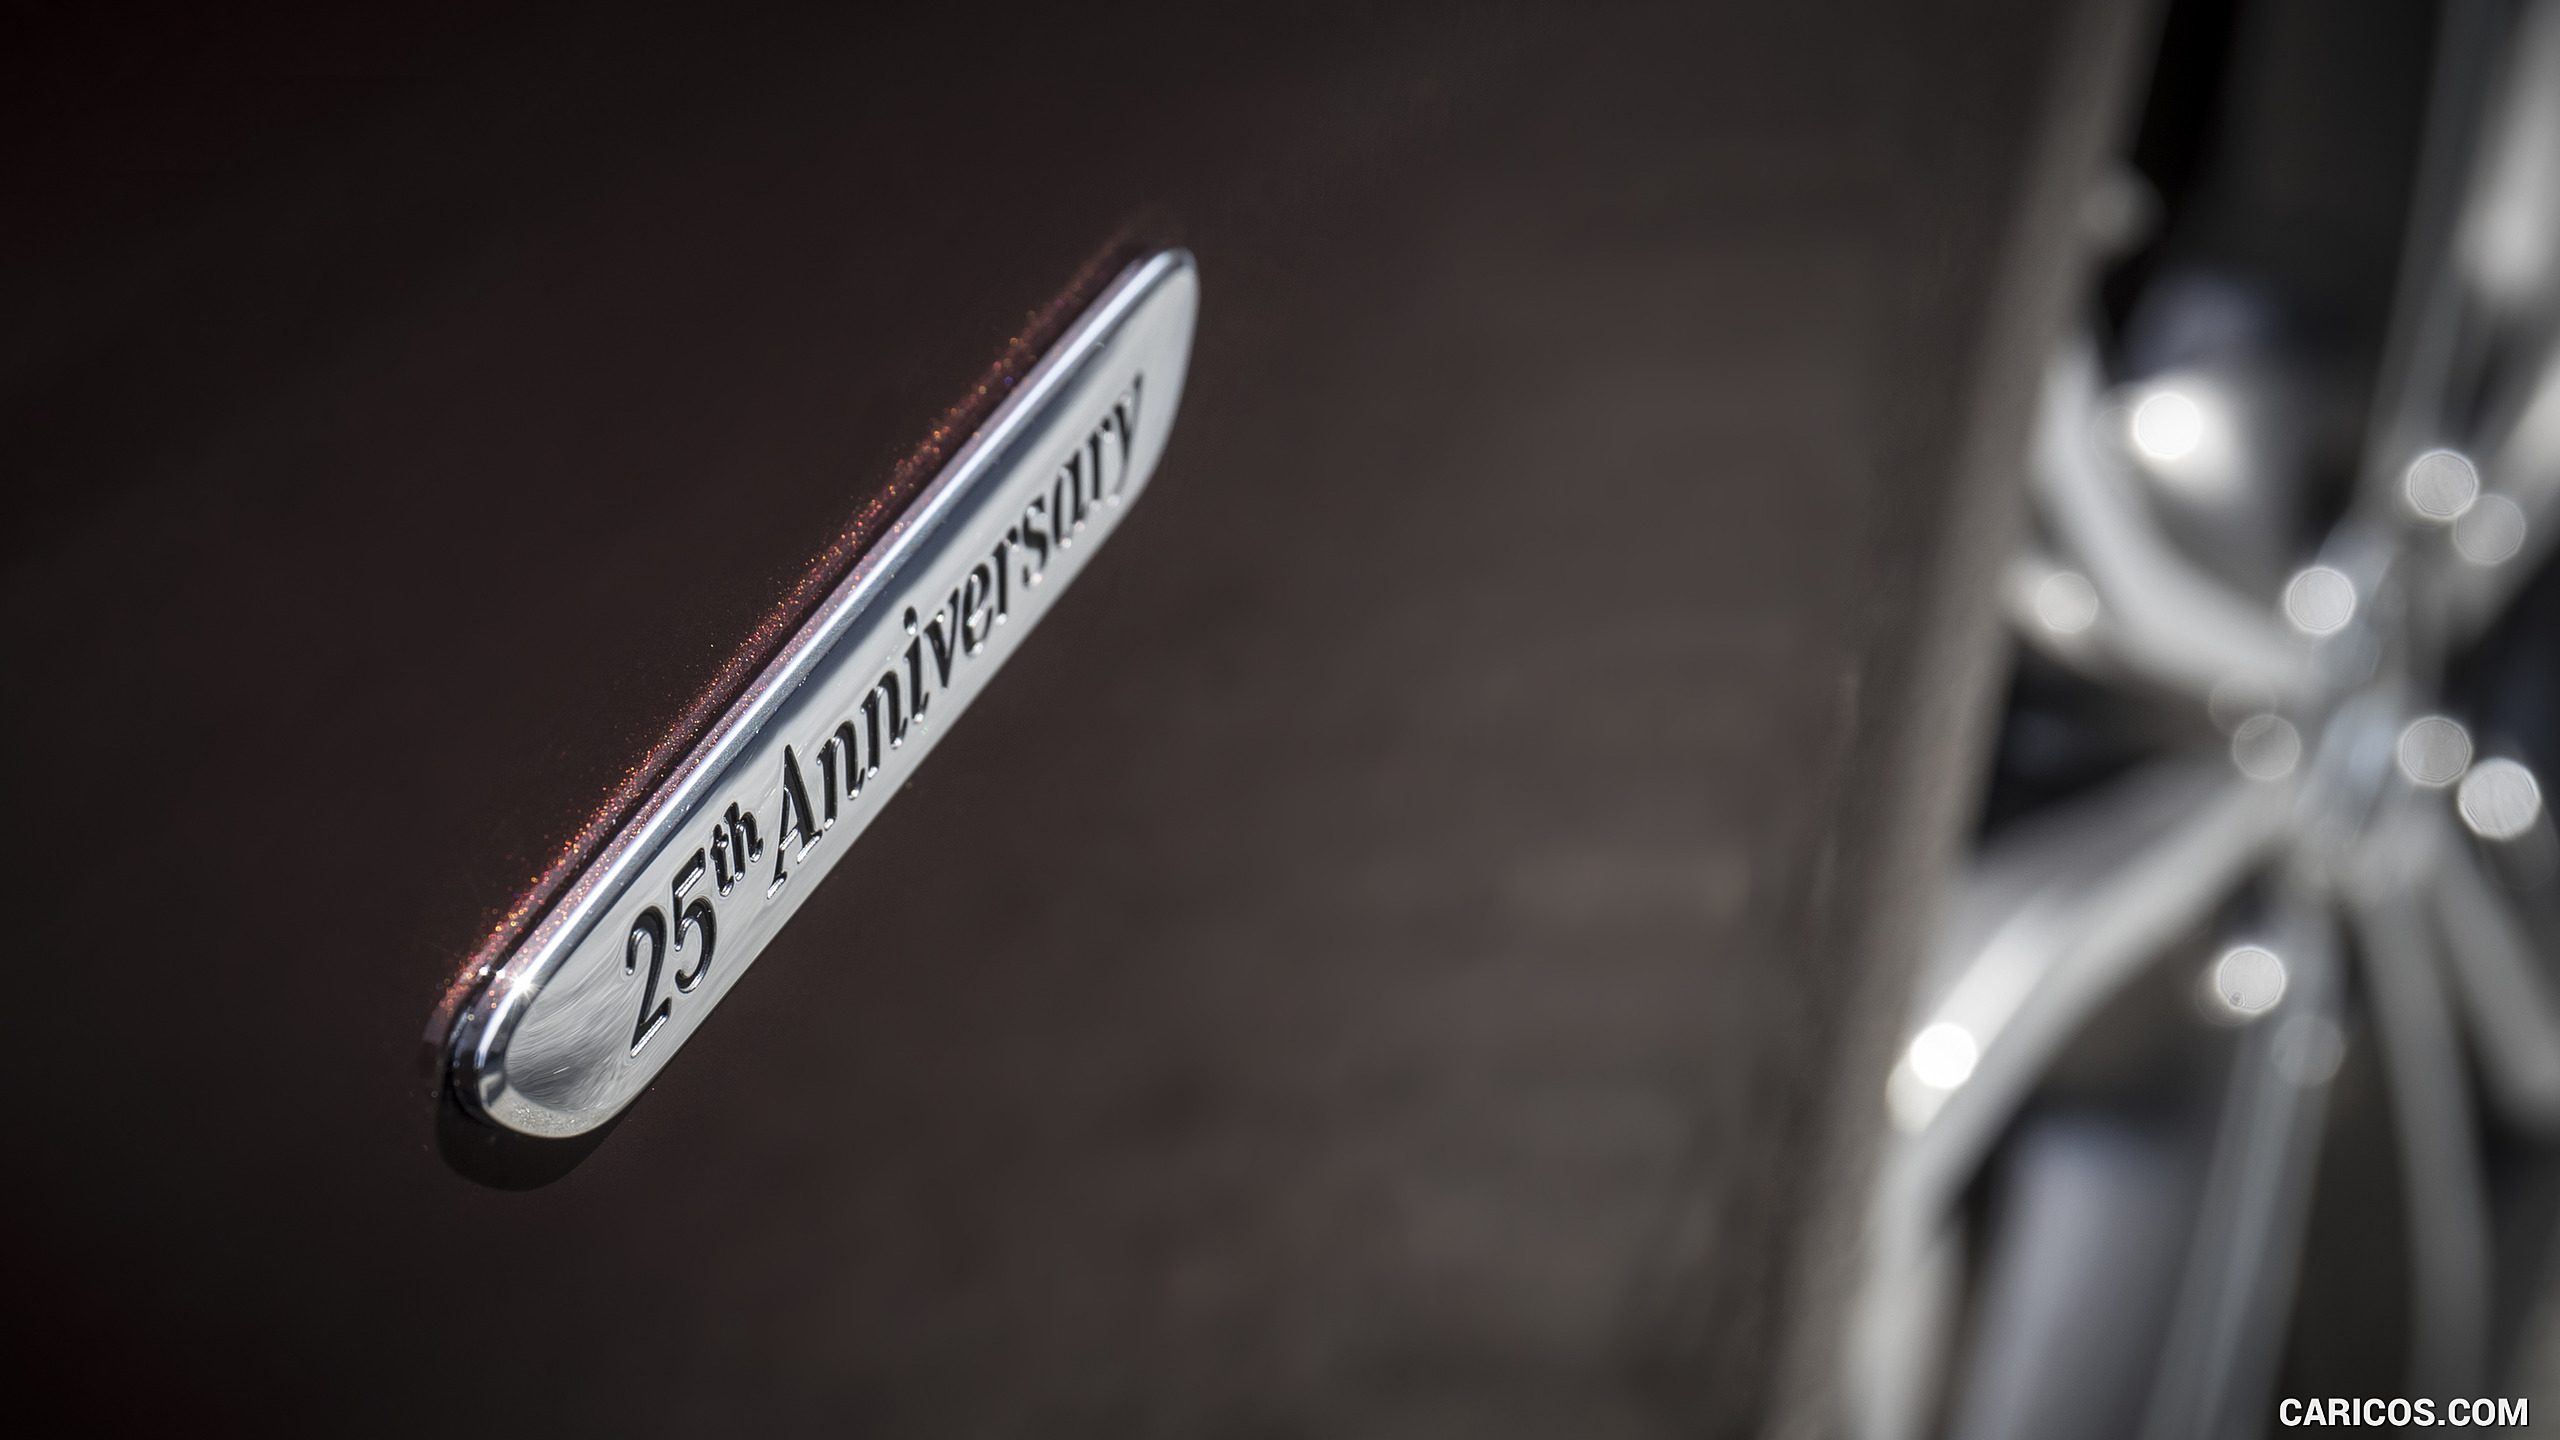 2018 Mercedes-Benz E-Class E400 Cabrio 4MATIC 25th Anniversary Edtion - Badge, #119 of 158